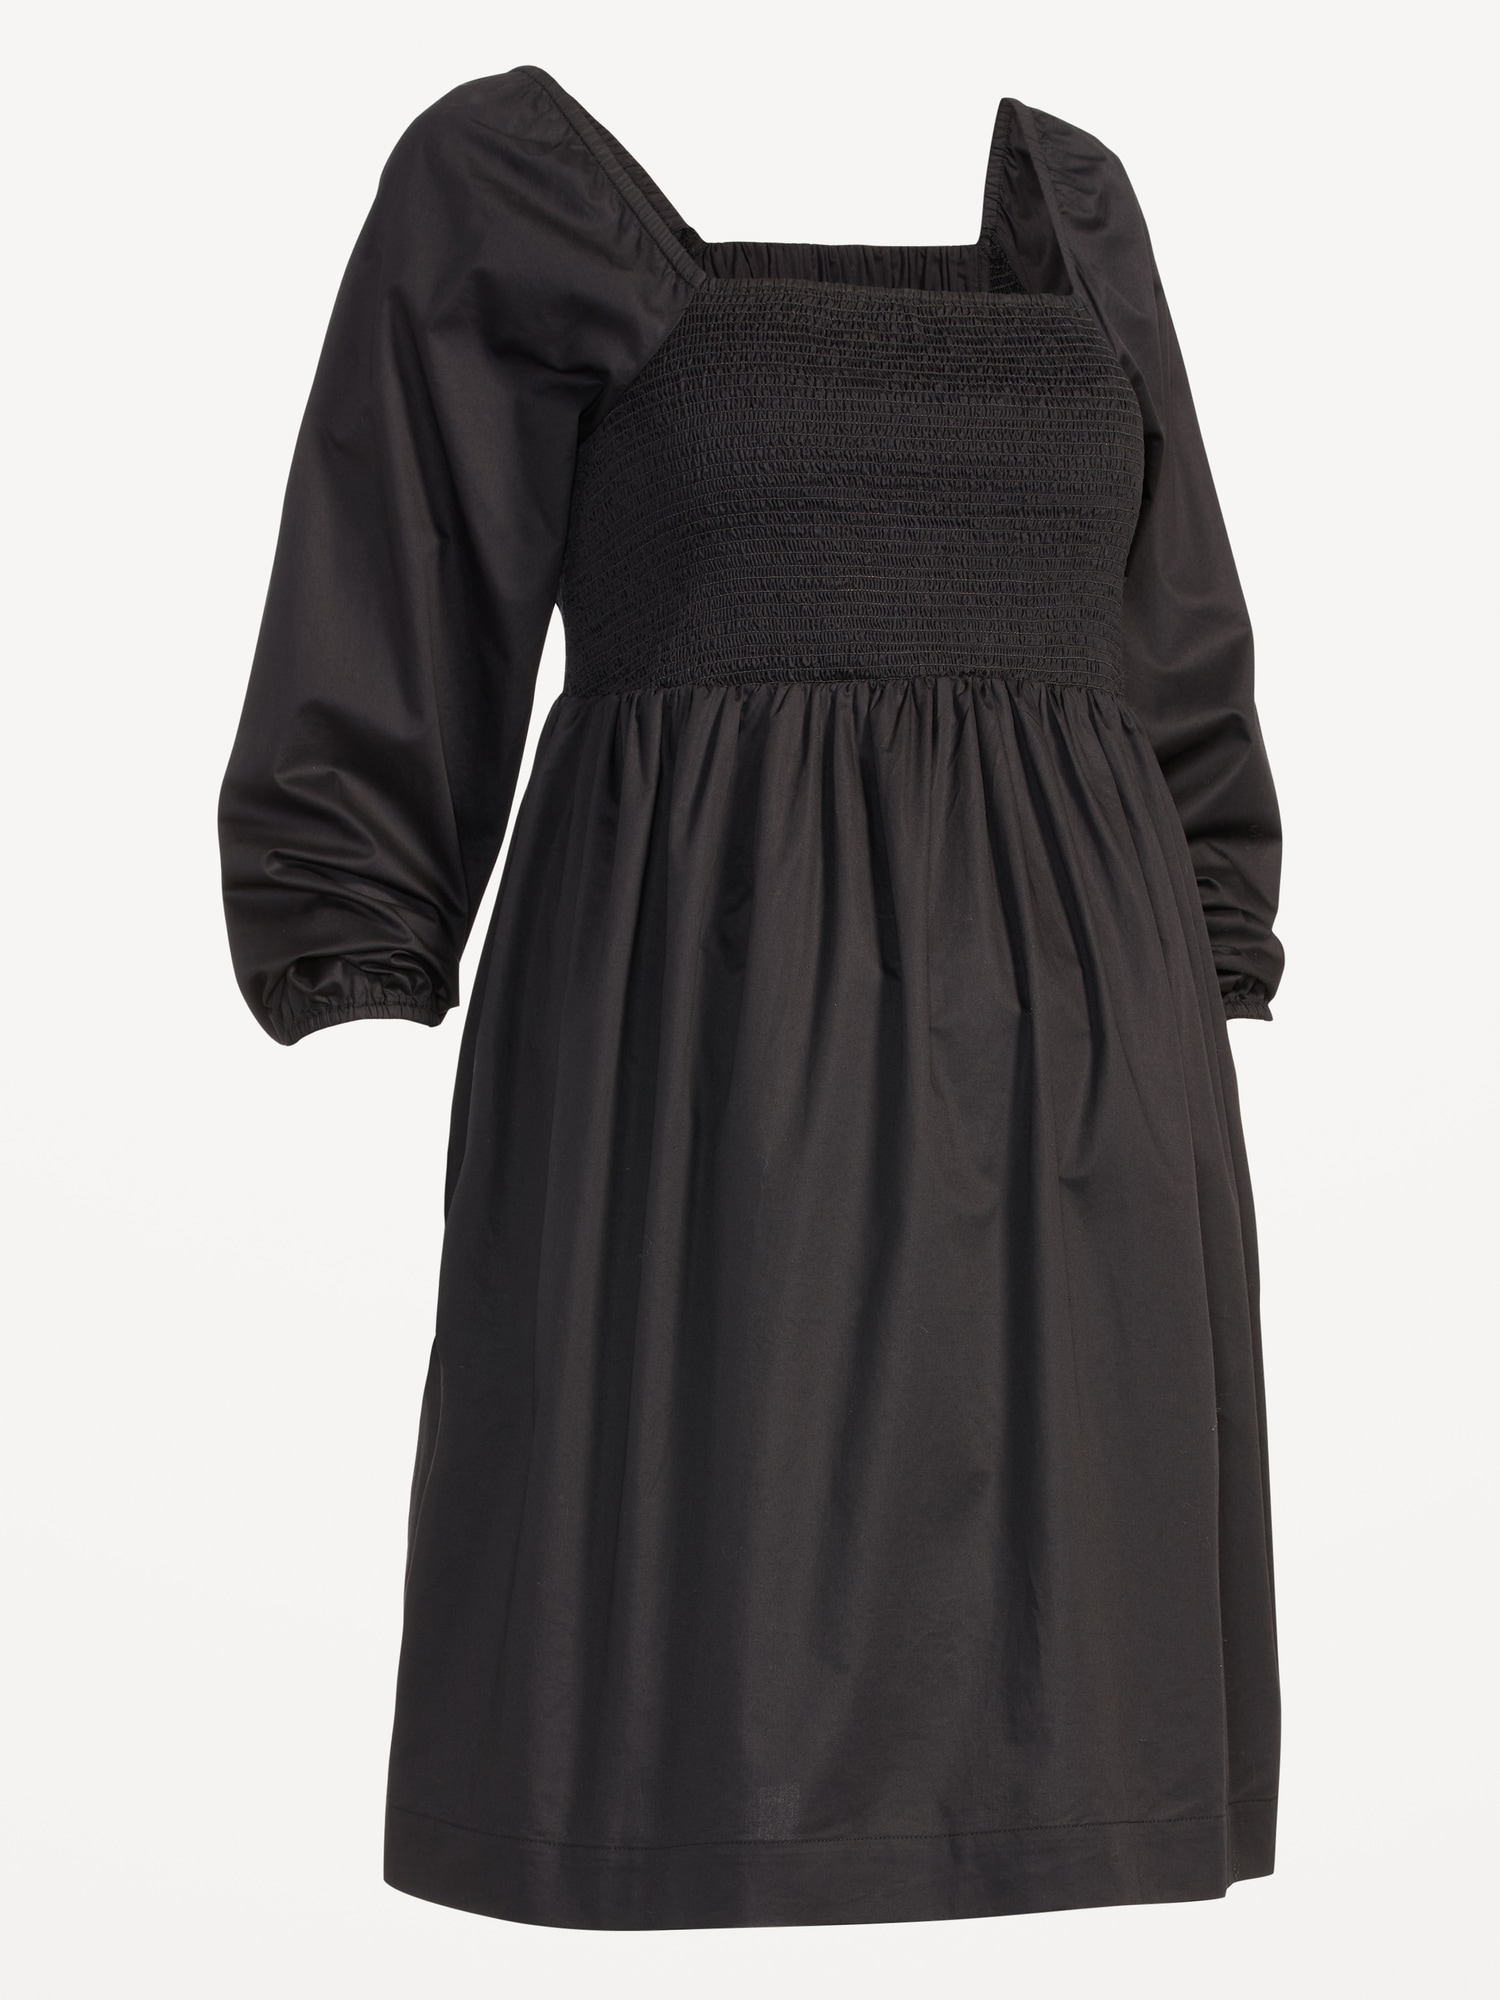 New Look shirred square neck midi dress in black